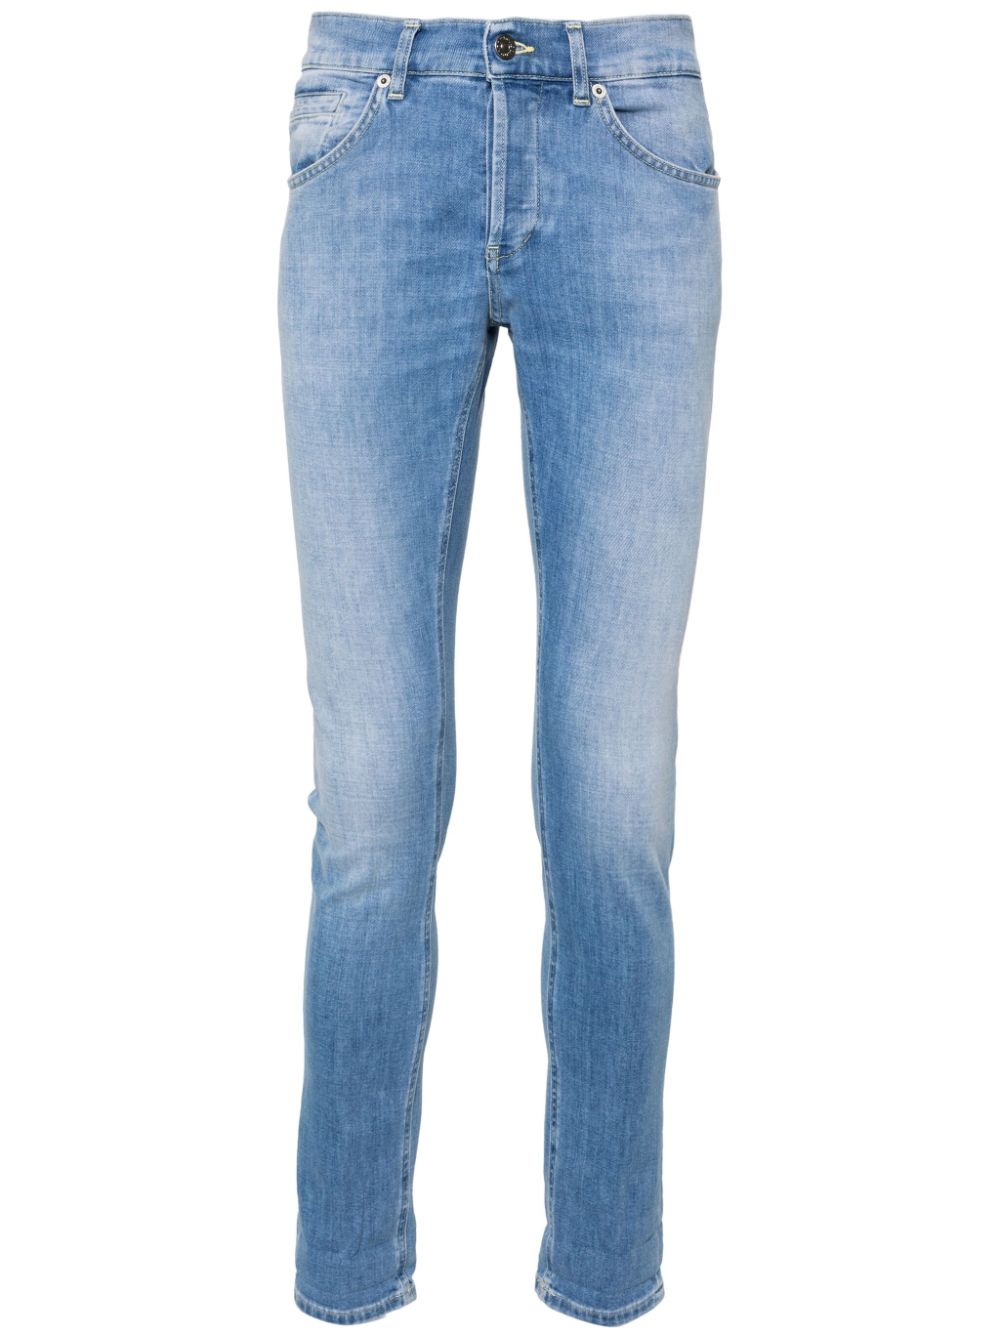 George mid-rise skinny jeans